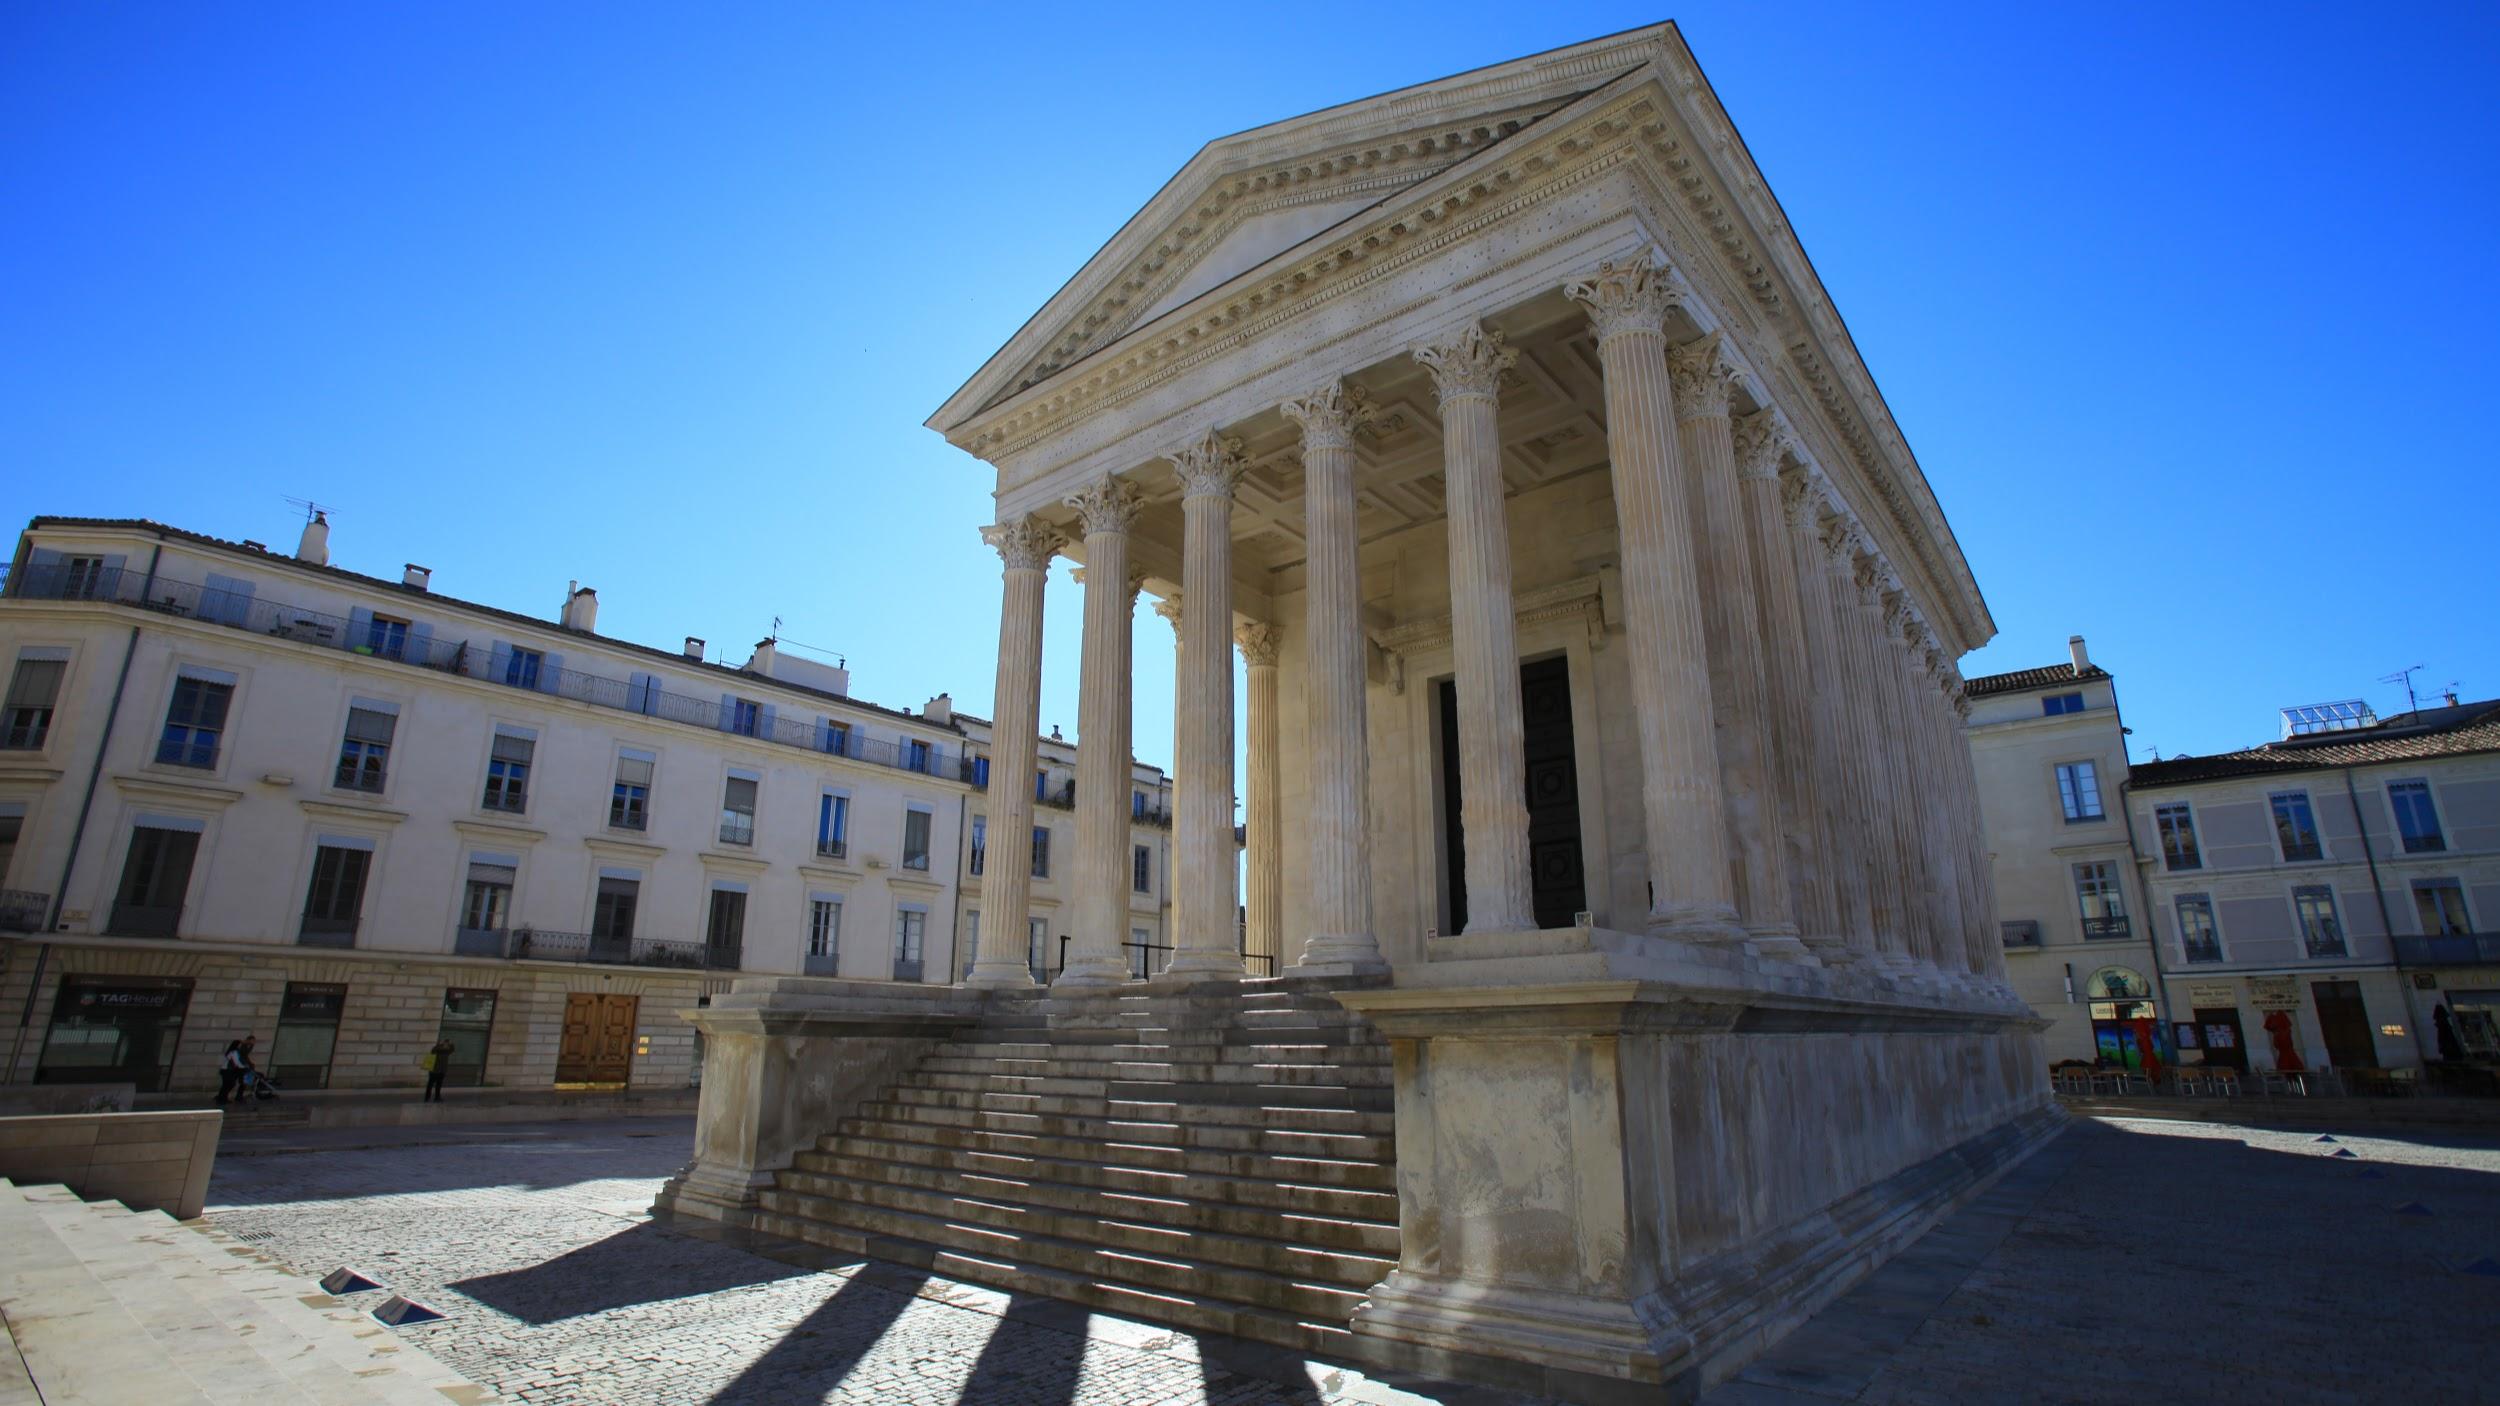 Maison Carrée  Nîmes